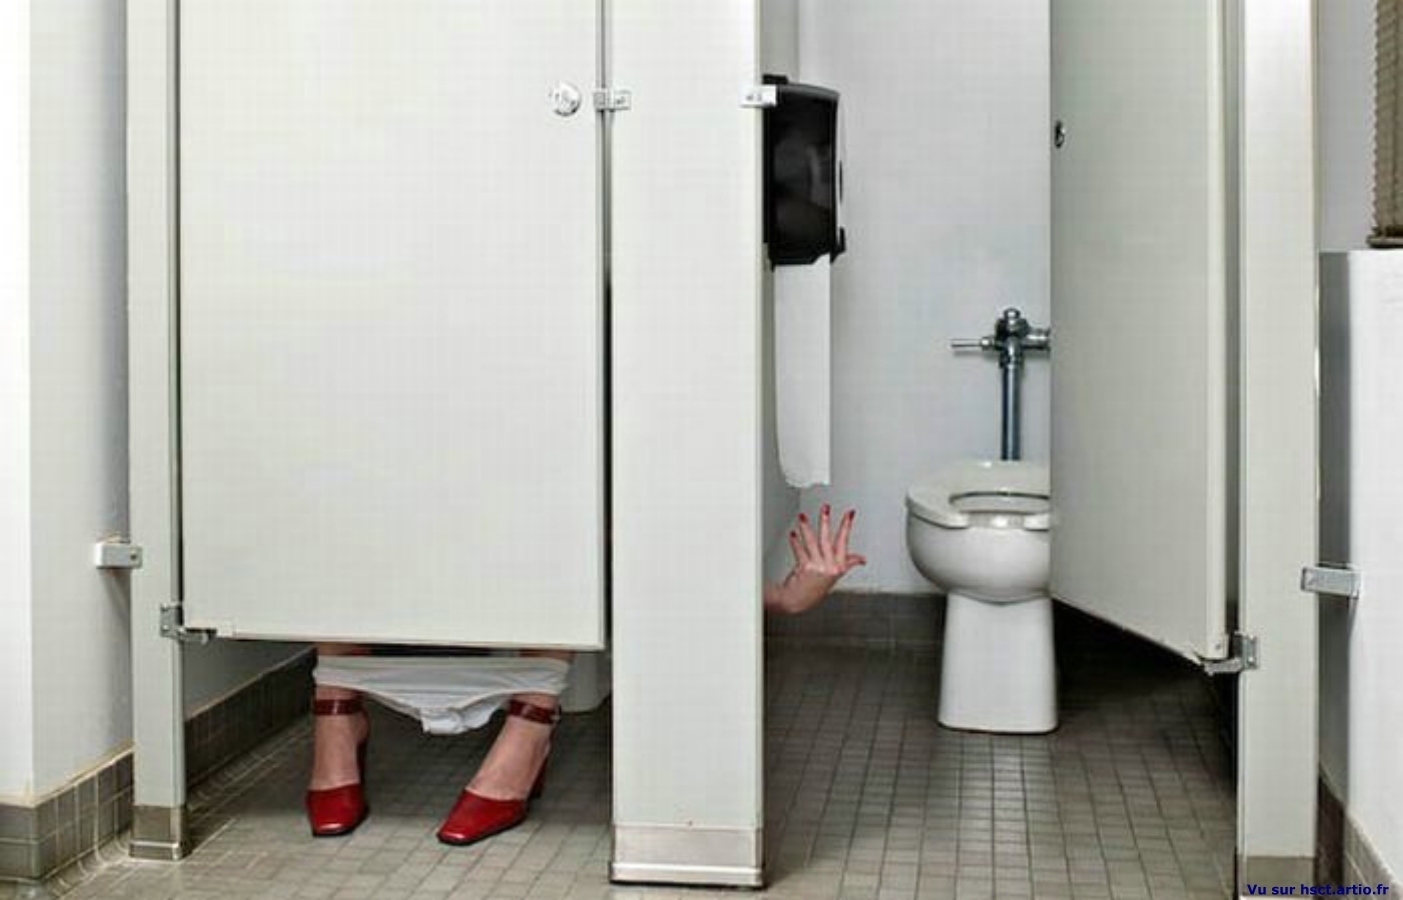 toilettes WC pq humour ergonomie